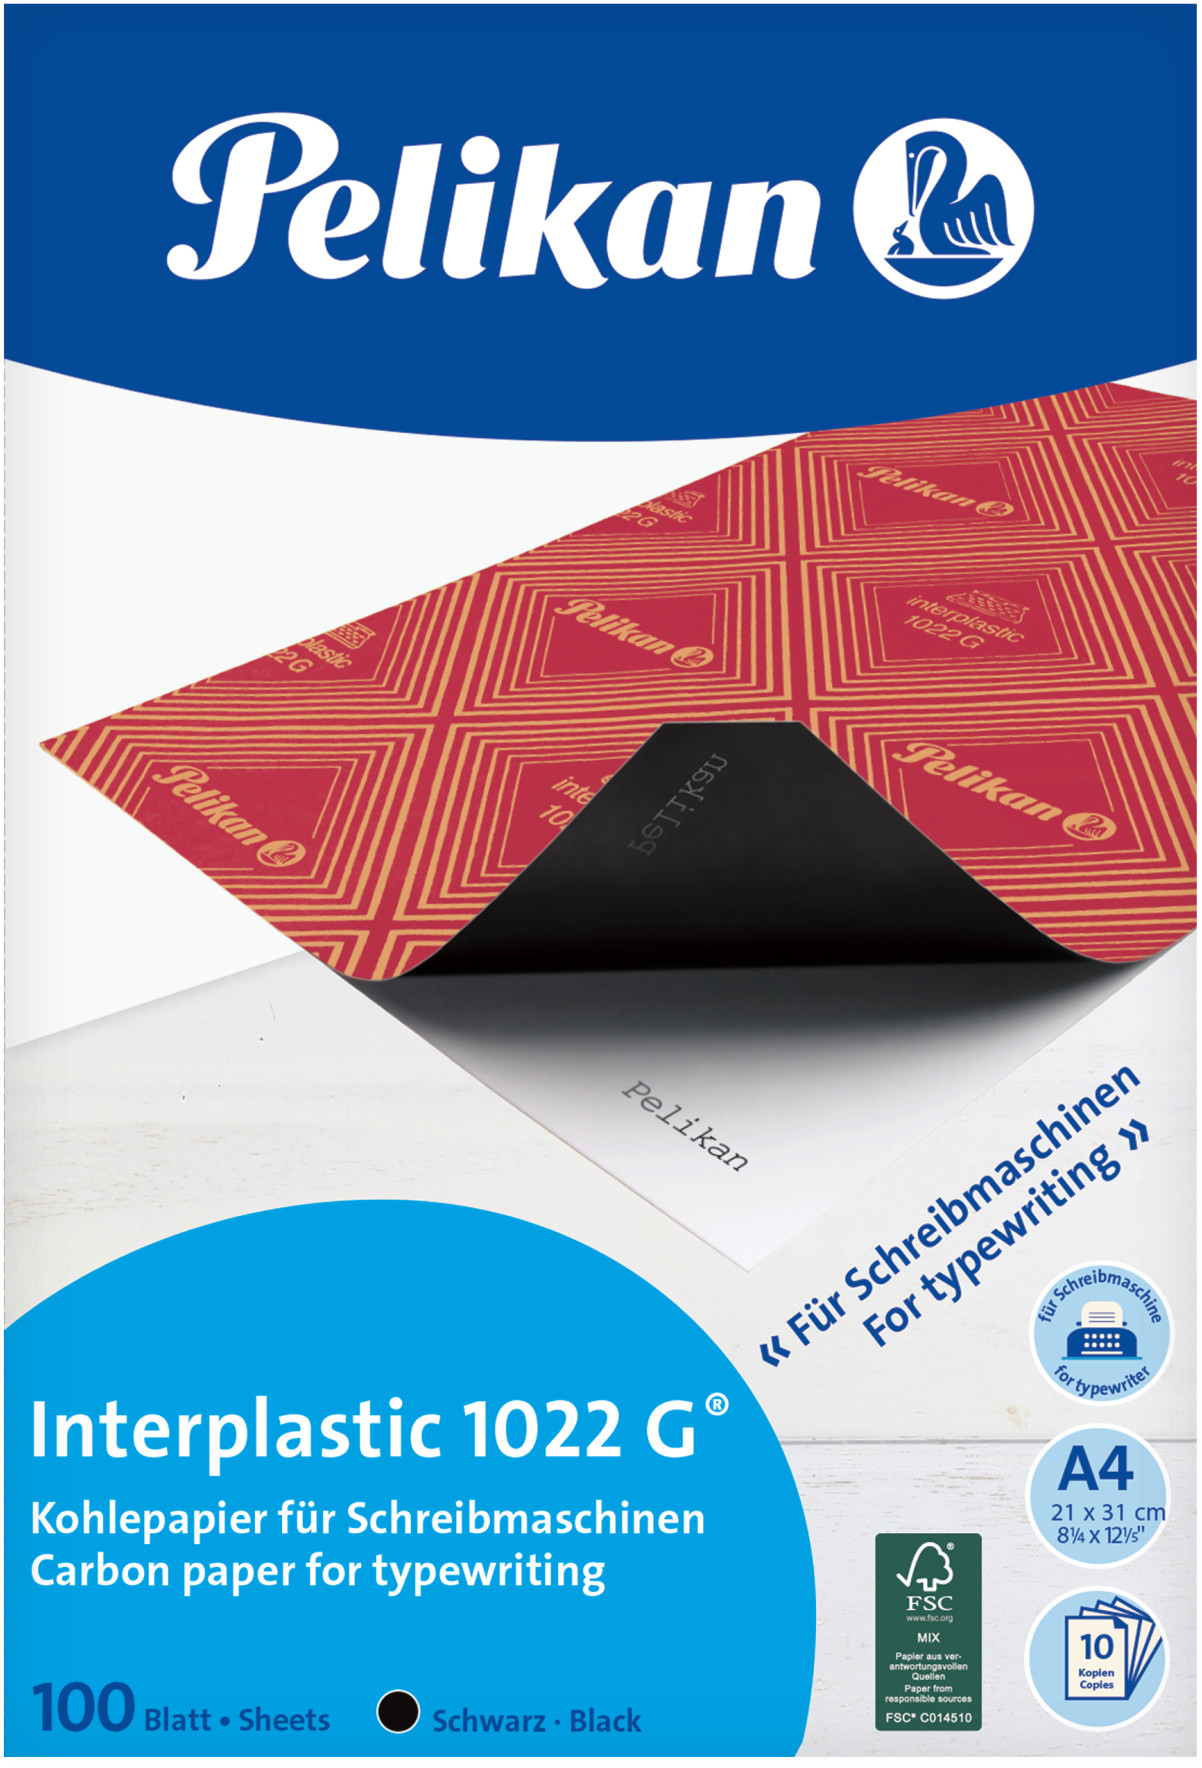 PELIKAN Kohlepapiere 1022G A4 404400 interplastic 100 Blatt